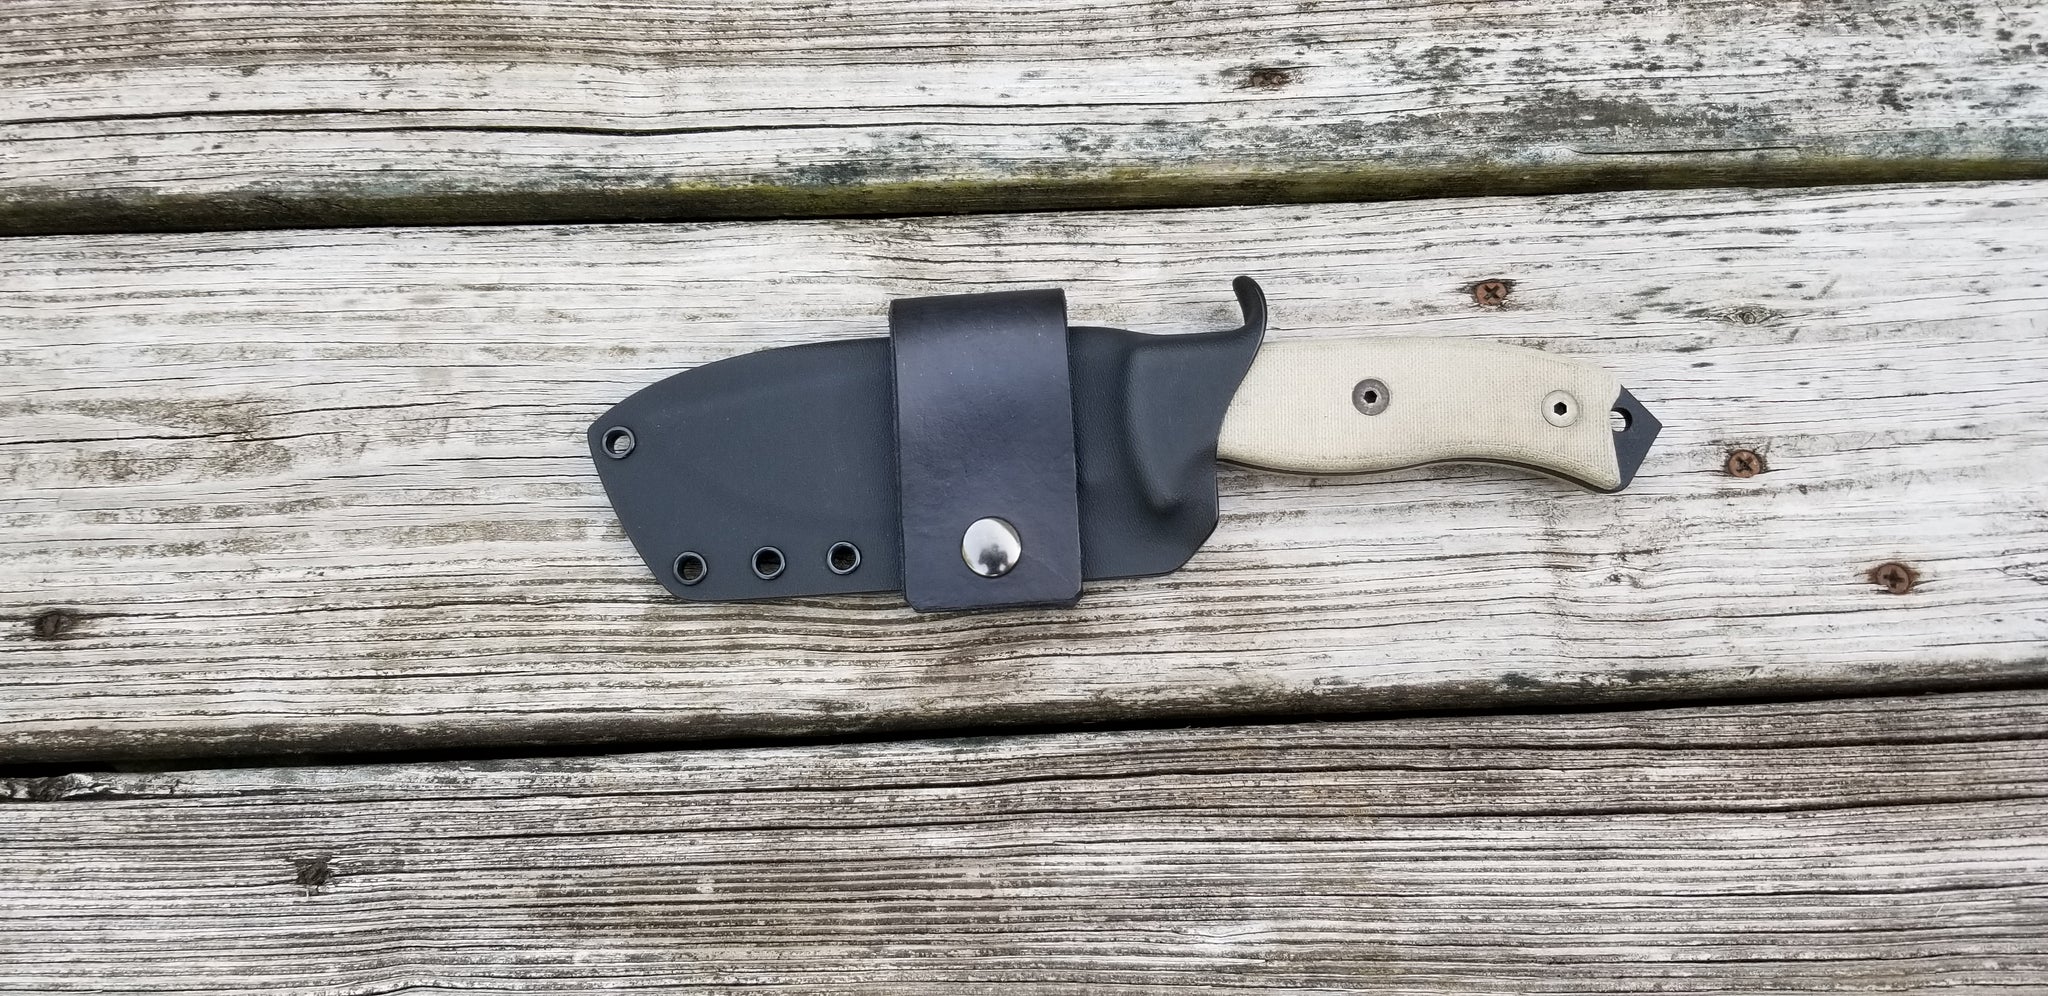 Ontario RAT-5 custom kydex sheath, single leather scout carry loop